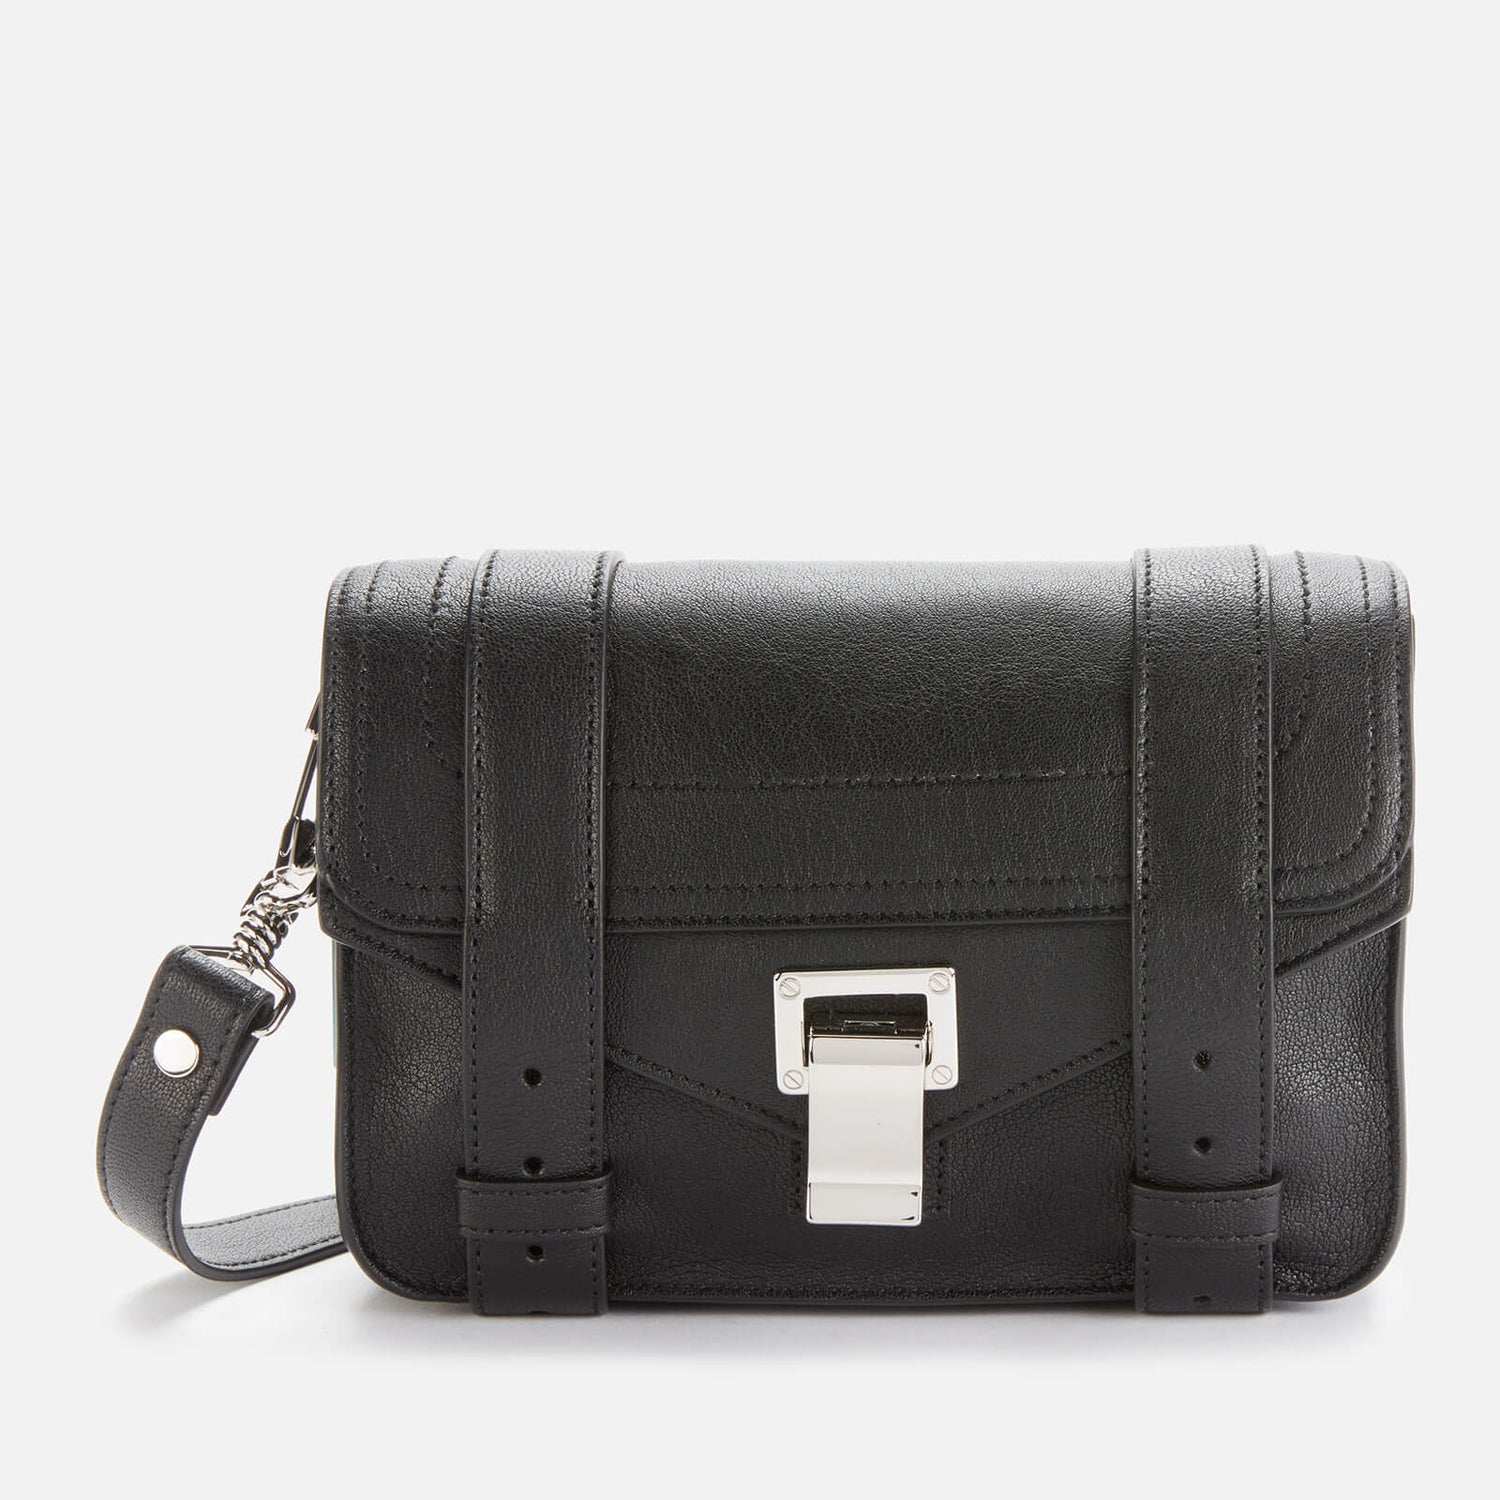 Proenza Schouler Women's Lux Leather Ps1 Mini Cross Body Bag - Black